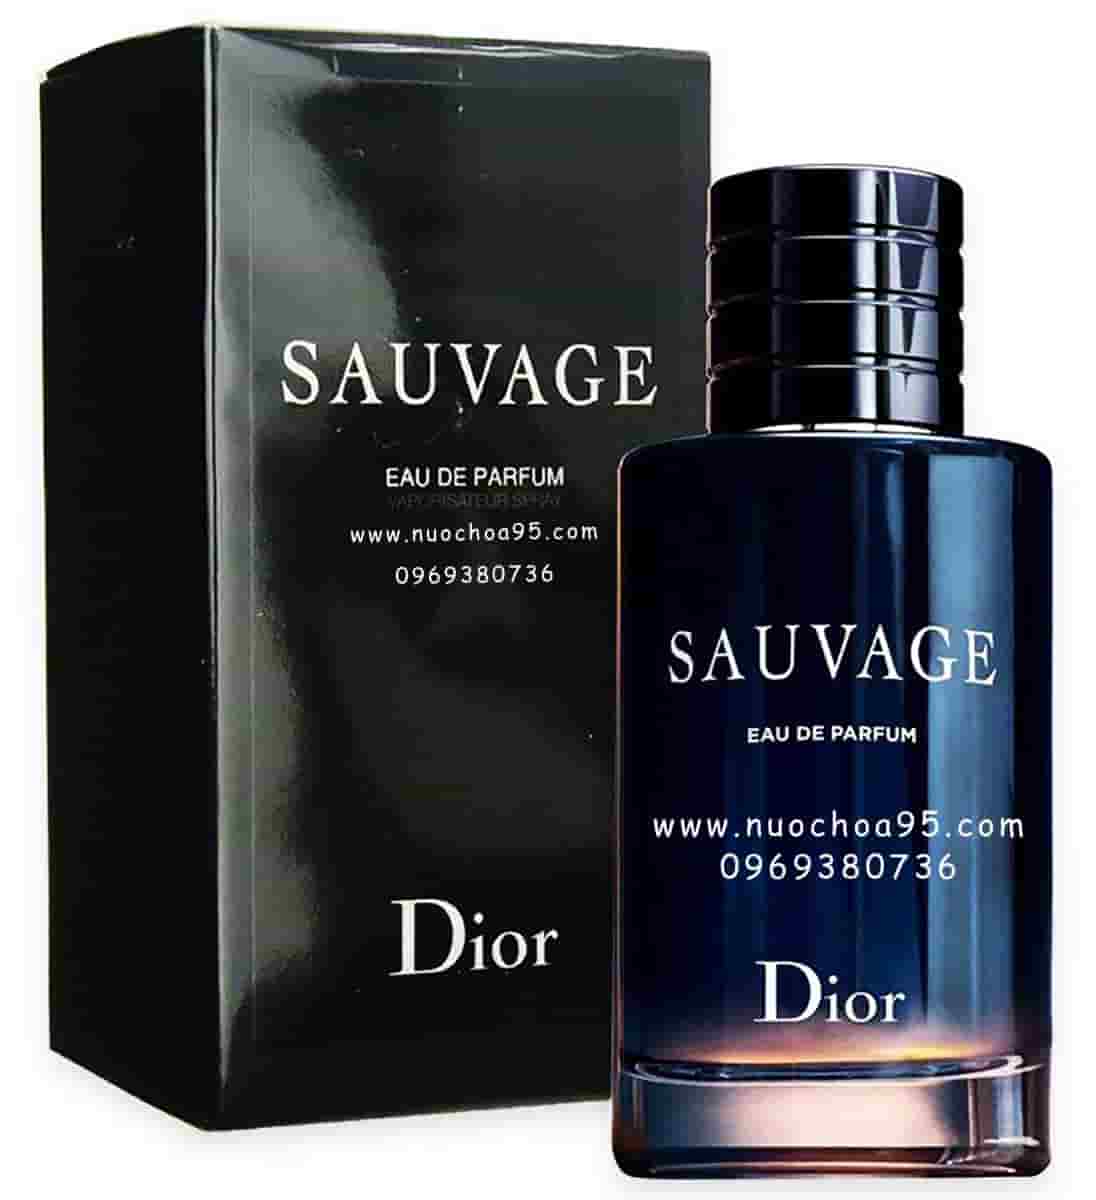 Mua Dior Eau Sauvage Eau de Toilette Spray for Men 200 ml trên Amazon Anh  chính hãng 2023  Giaonhan247